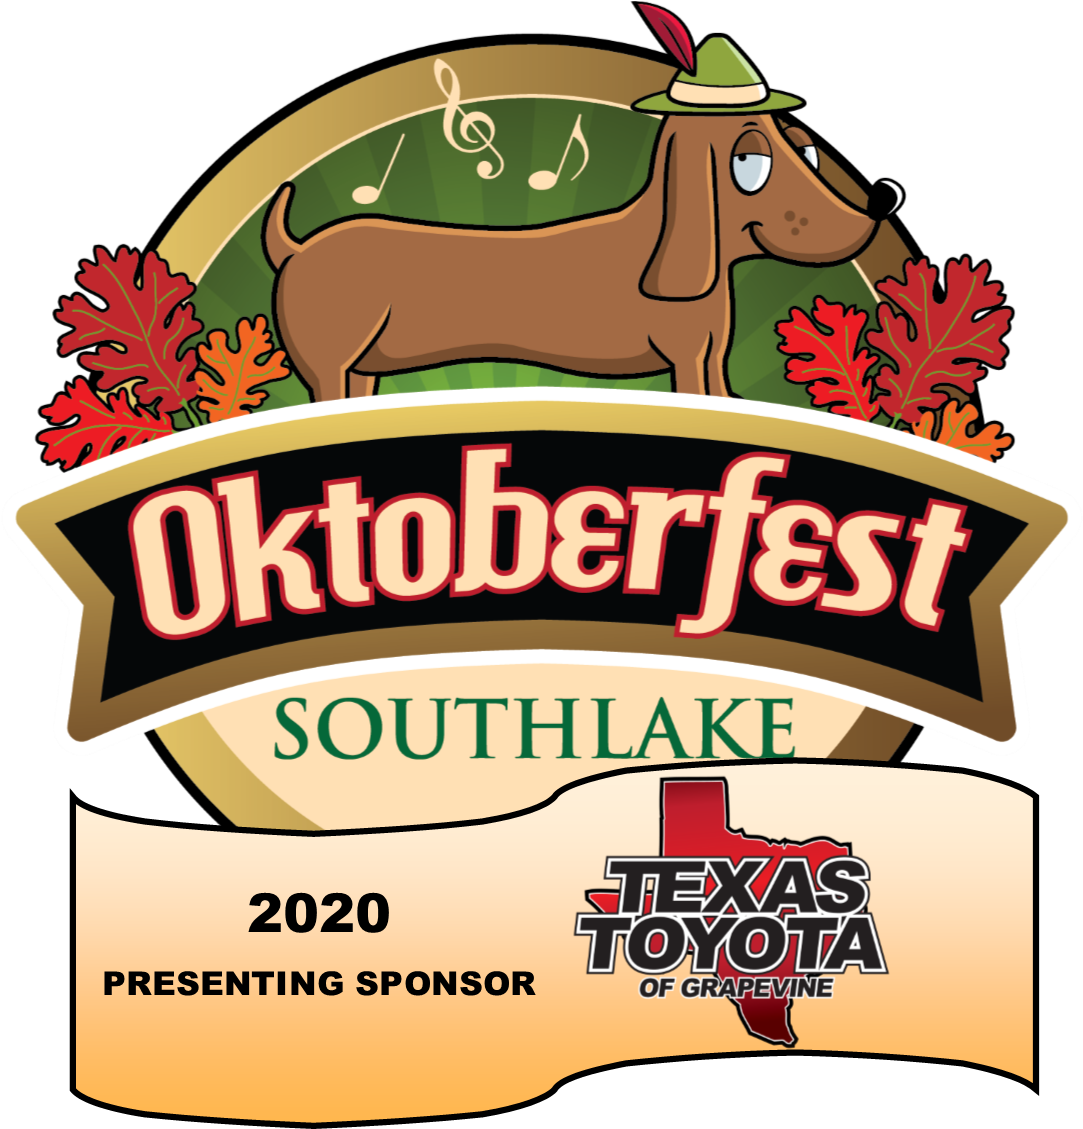 Oktoberfest Southlake2020 Sponsor Logo PNG image